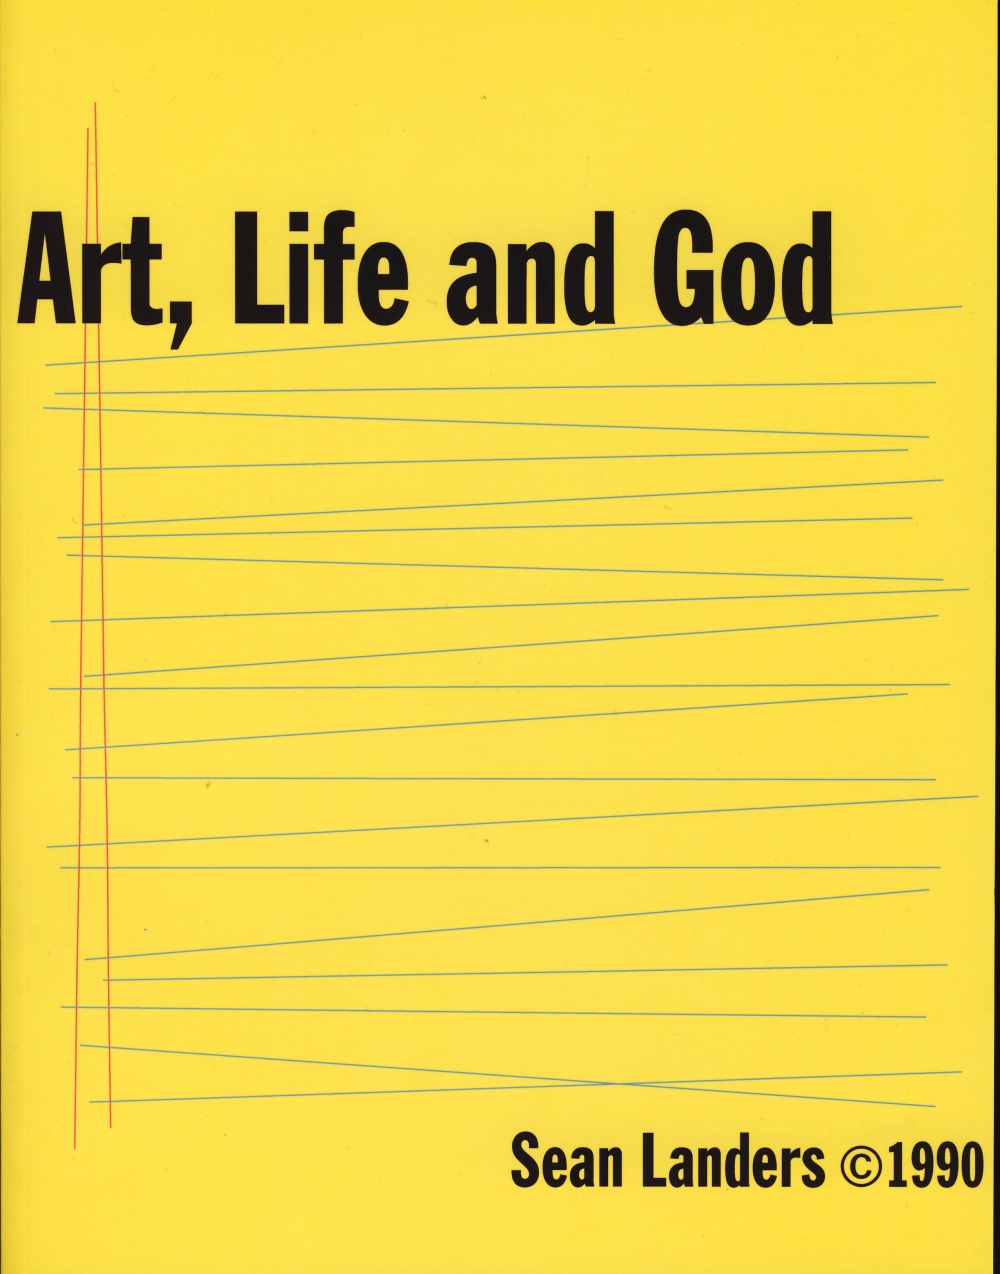 Sean Landers, Art, Life and God